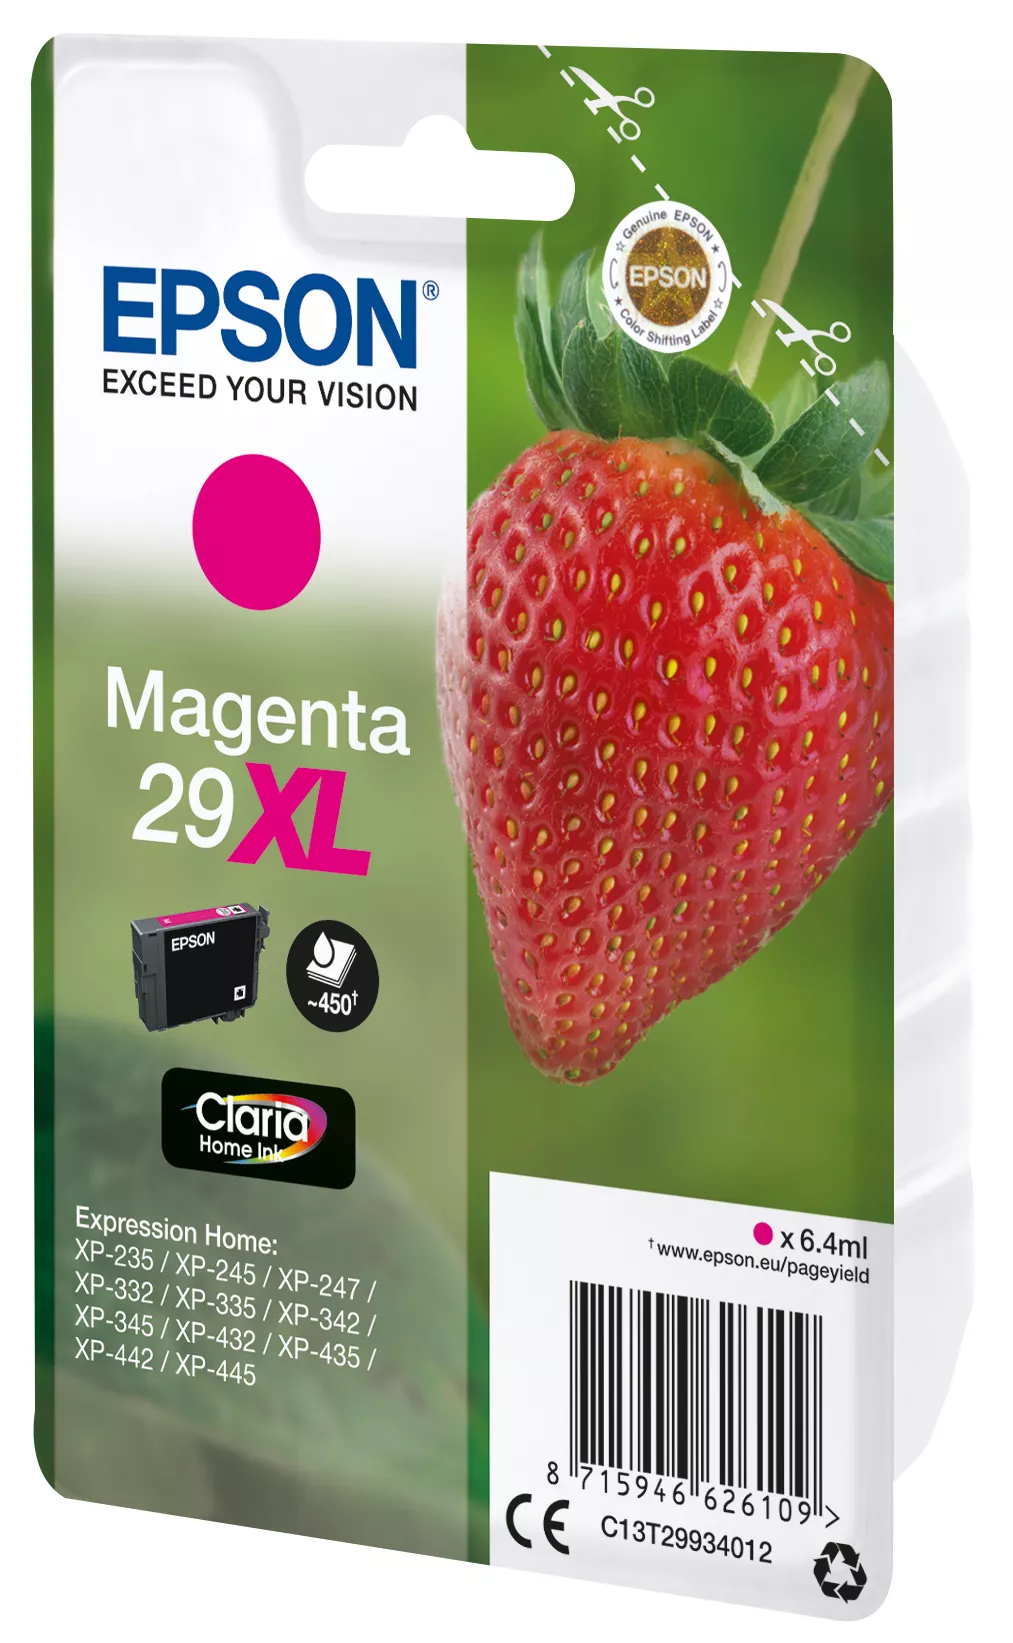 Vente EPSON Cartouche Fraise Encre Claria Home Magenta XL Epson au meilleur prix - visuel 2